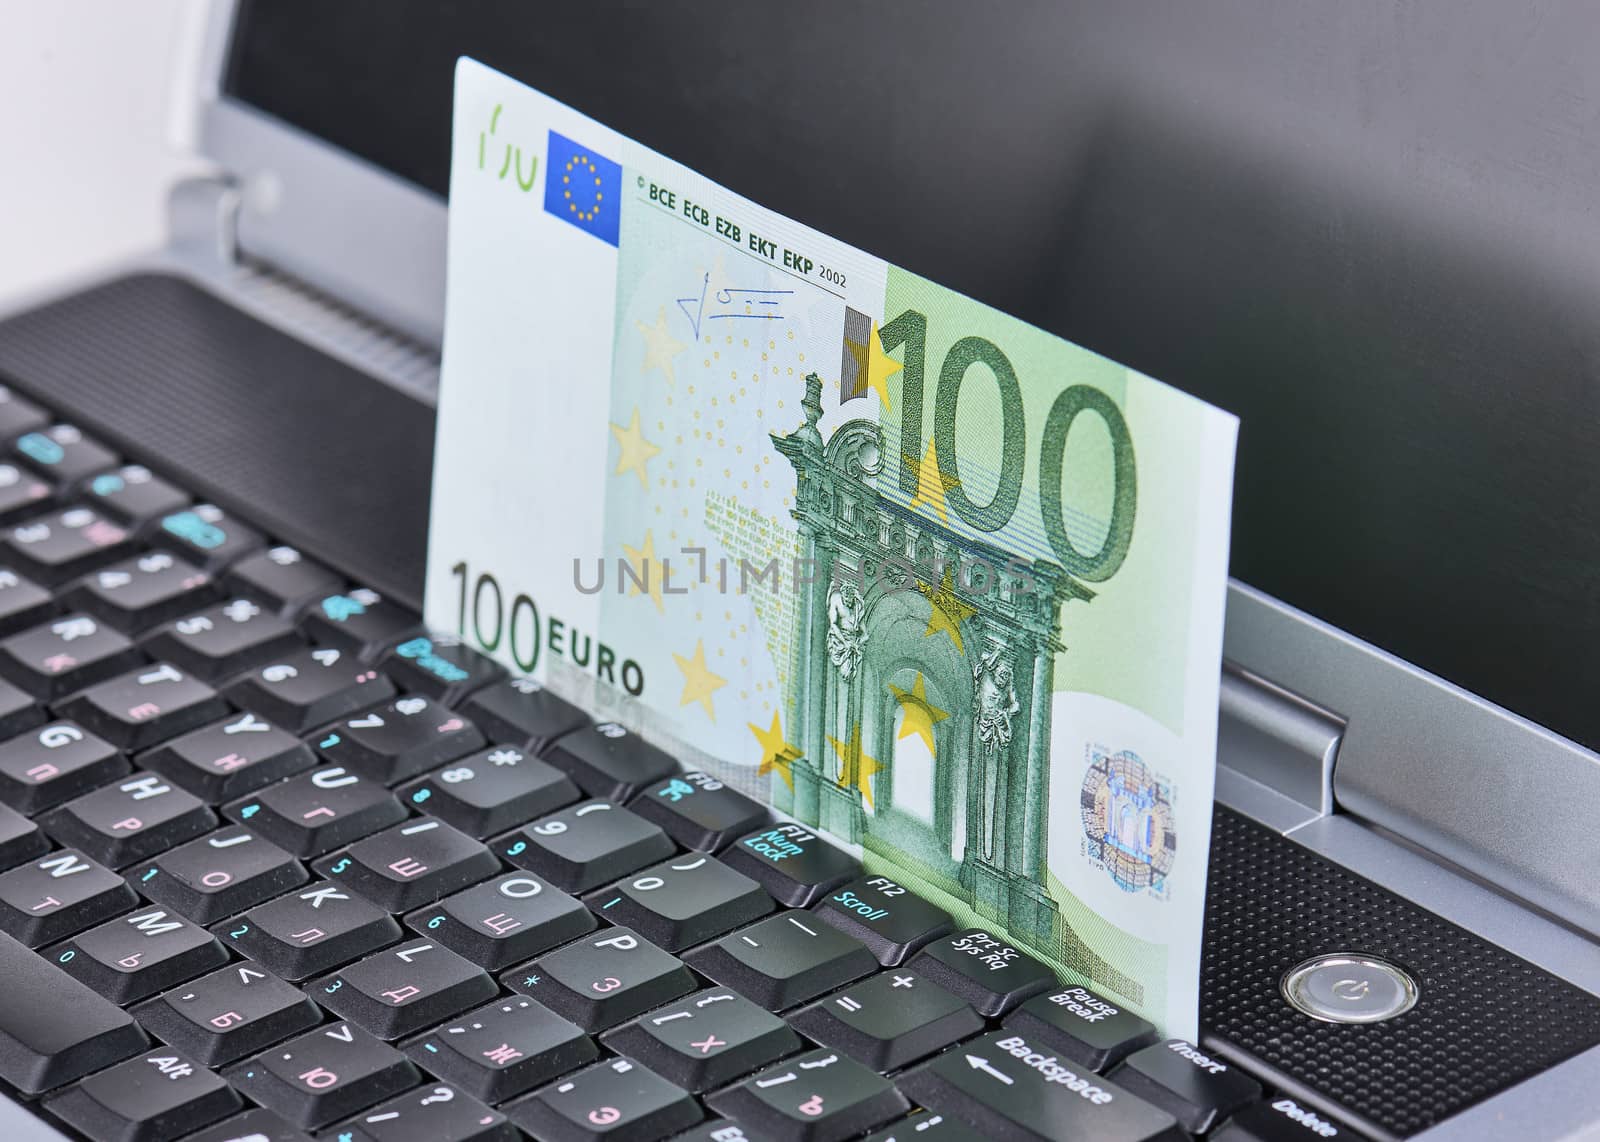 100 euro banknote displayed in motion on a laptop keyboard closeup.